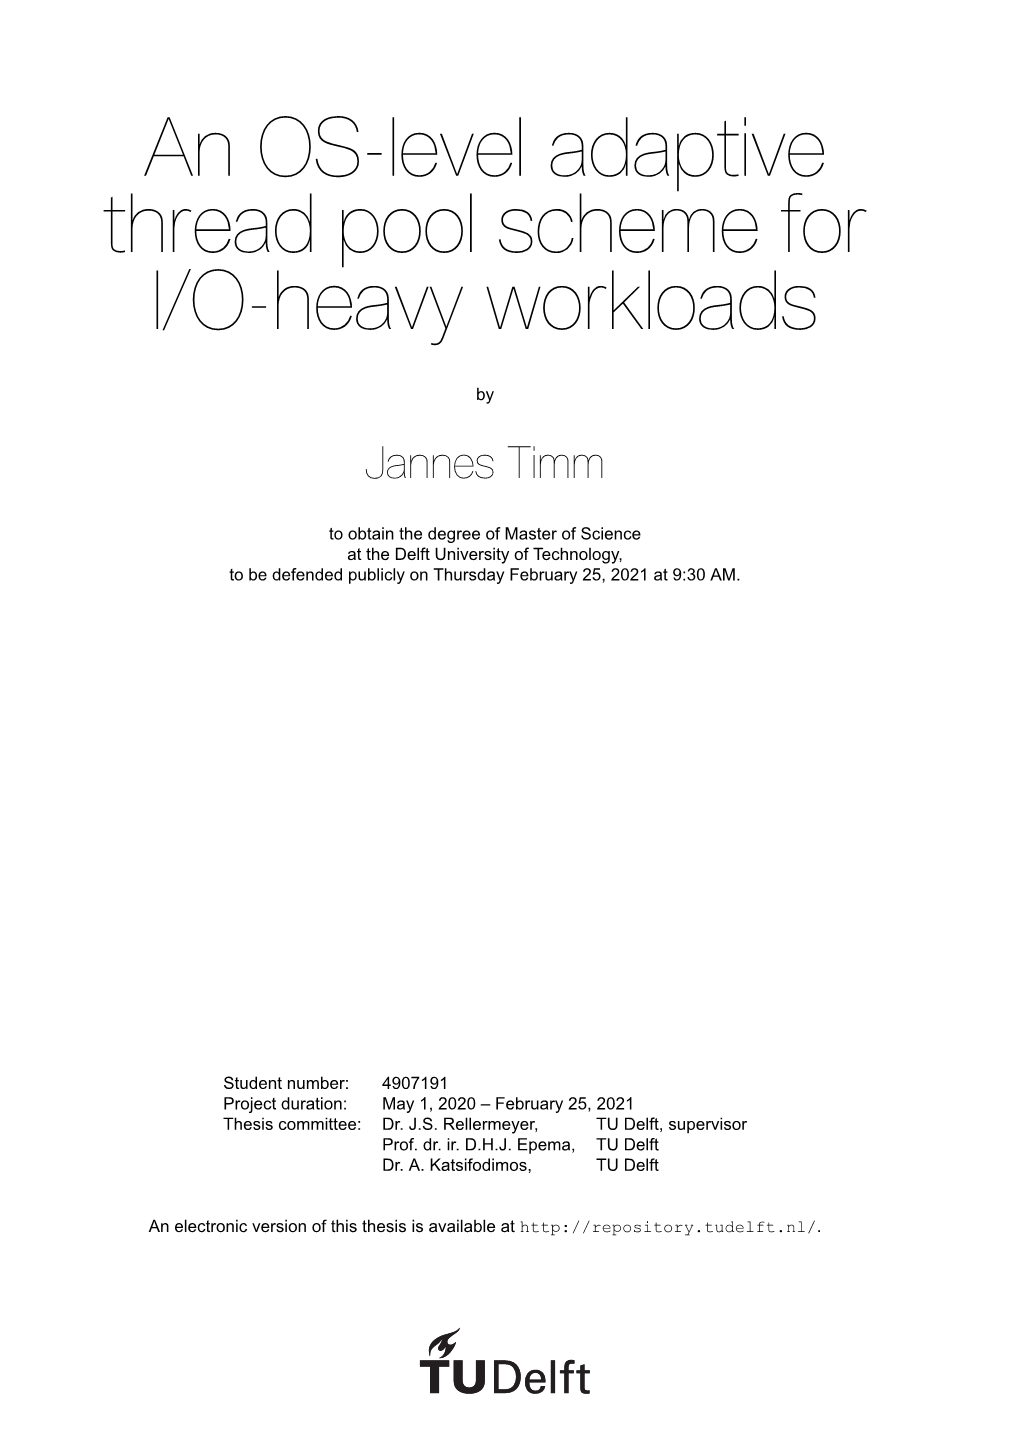 An OS-Level Adaptive Thread Pool Scheme for I/O-Heavy Workloads